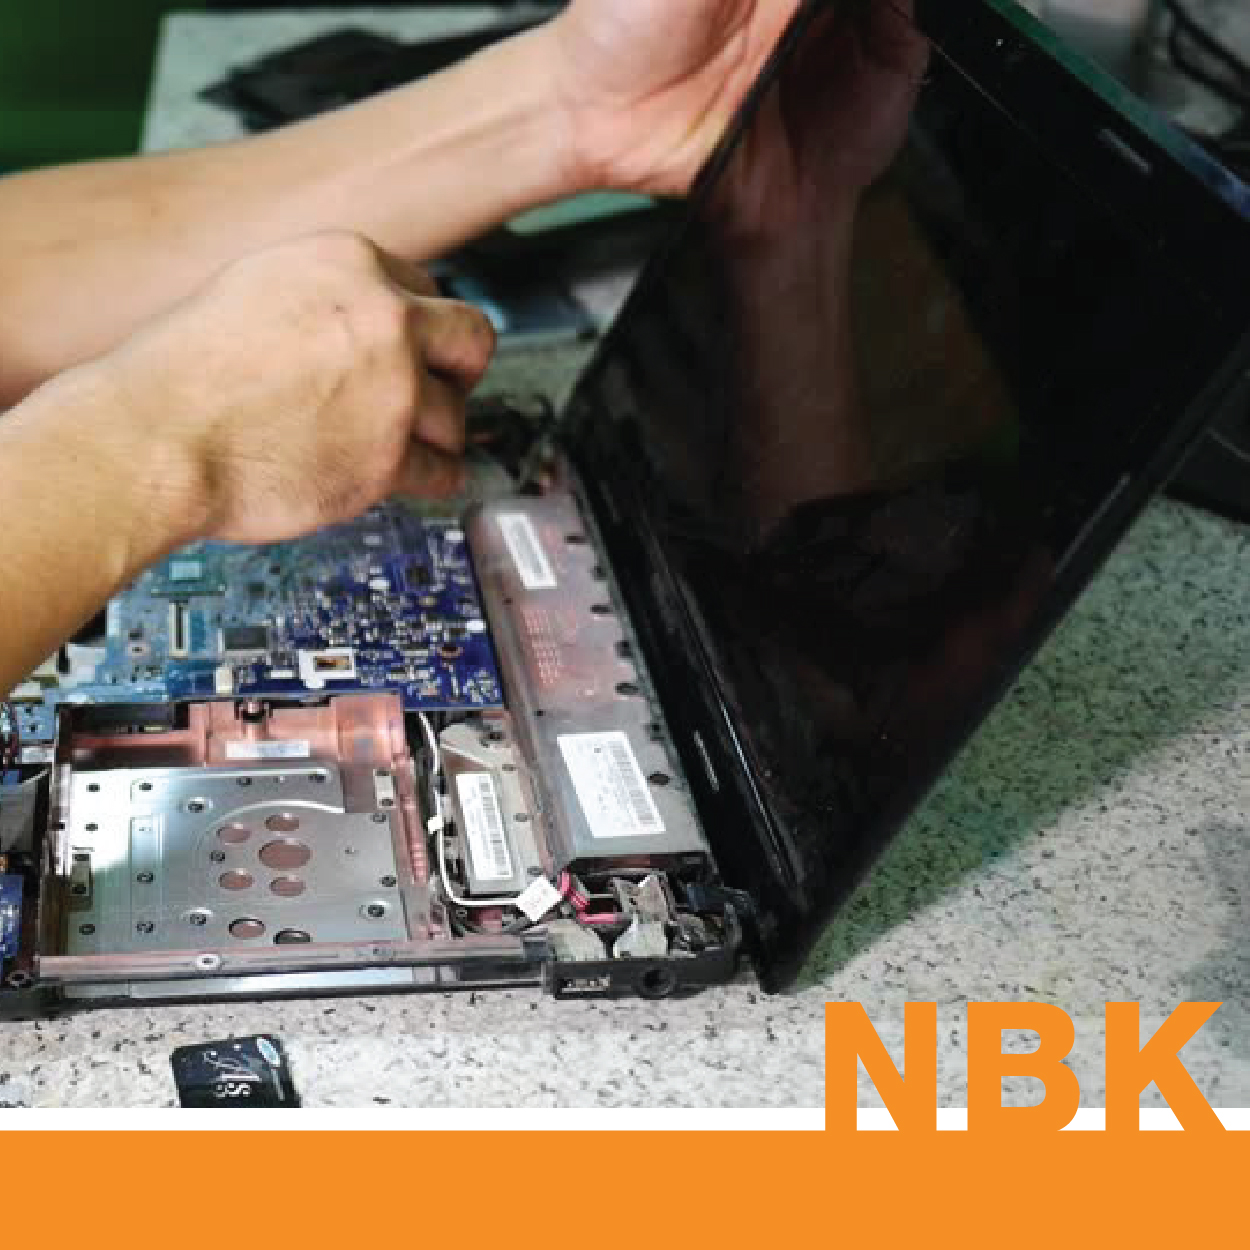 NBK : หลักสูตรช่างซ่อมคอมพิวเตอร์โน๊ตบุ๊ค